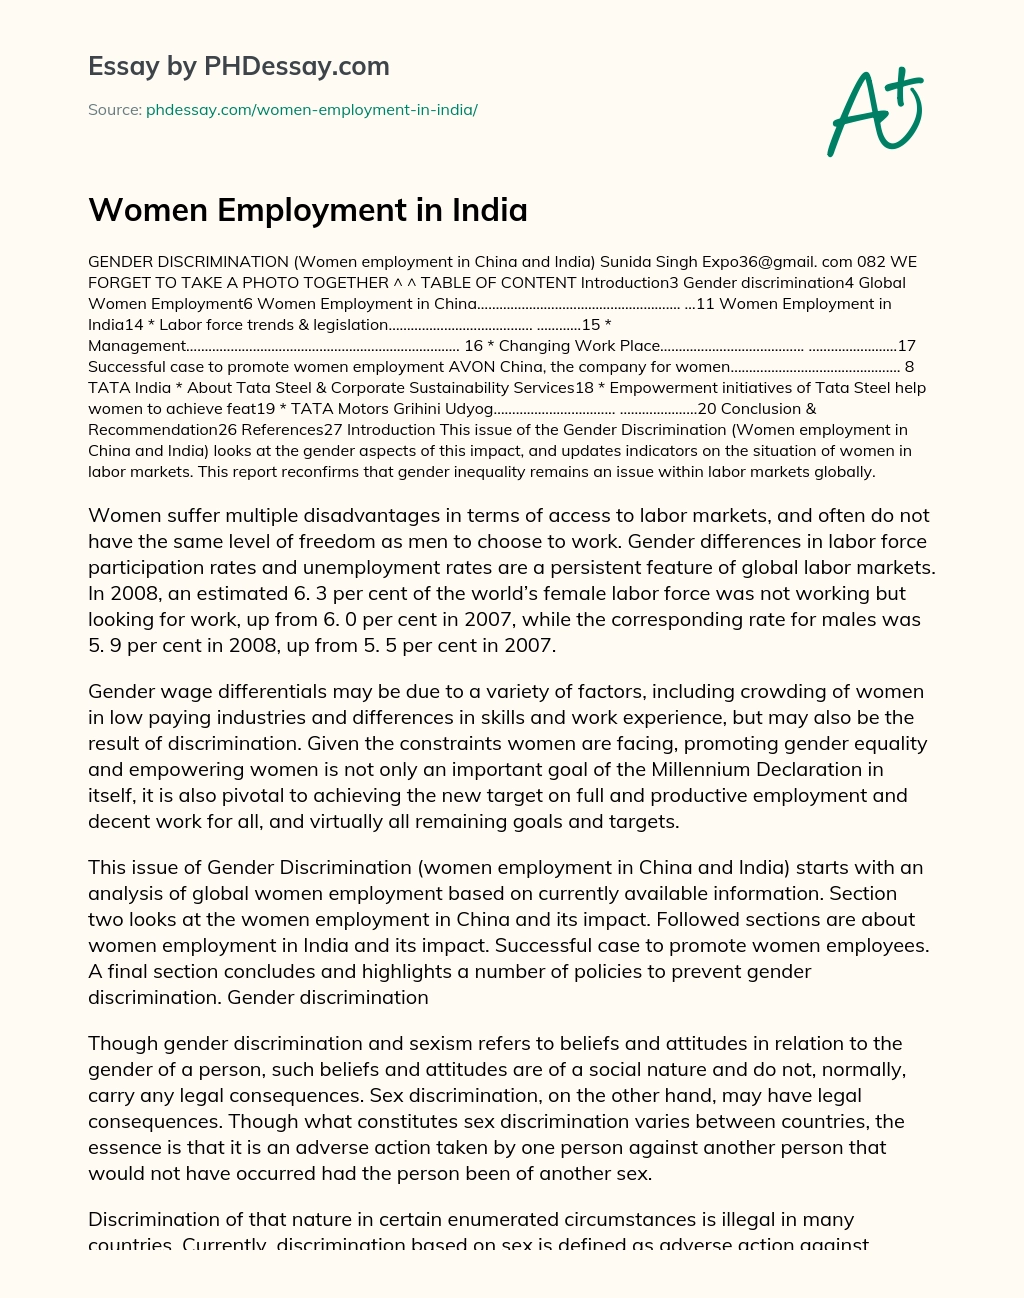 Women Employment in India essay